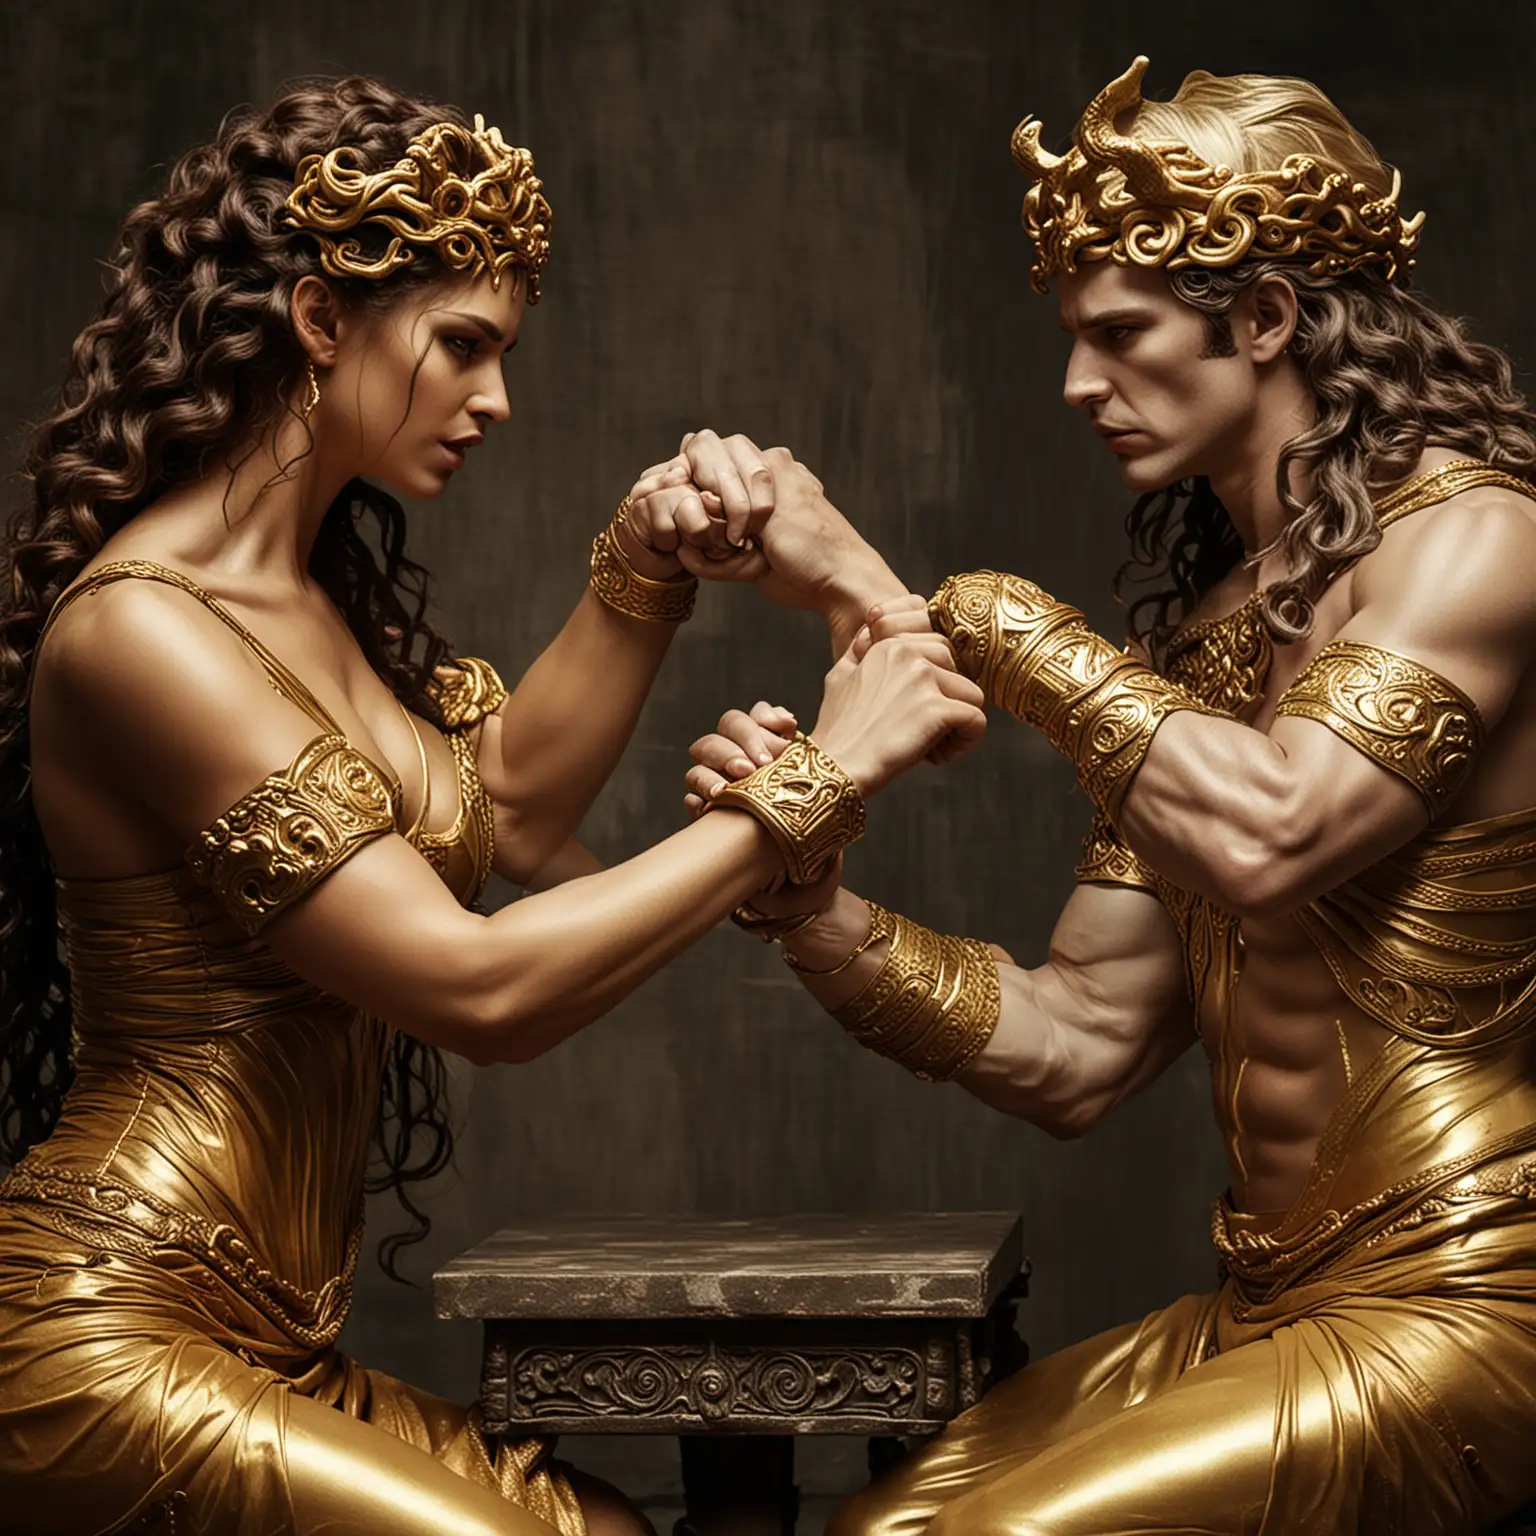 Medusa and King Midas arm wrestling